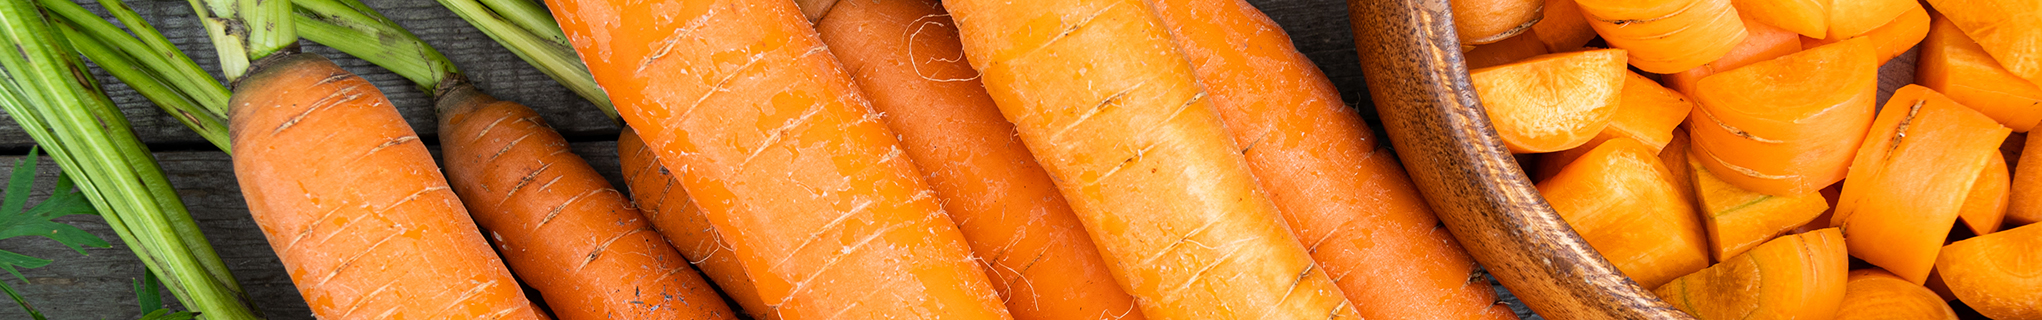 Raw carrot image 